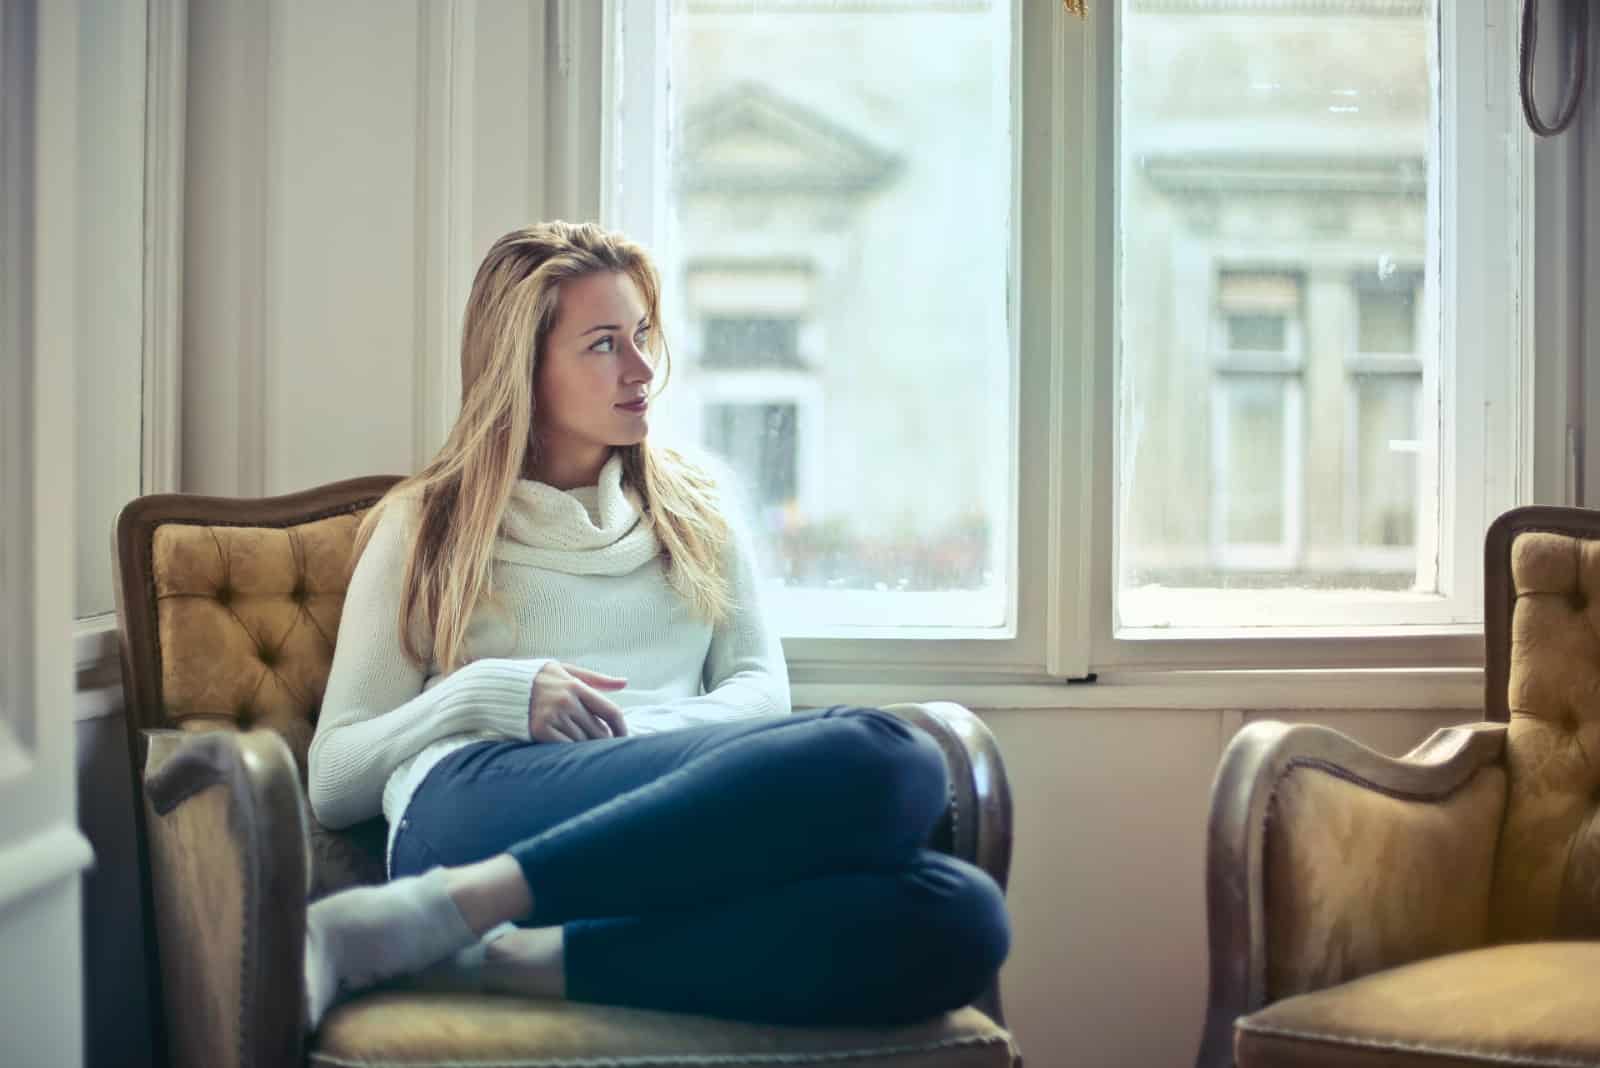 woman in white sweater sitting on armchair near window